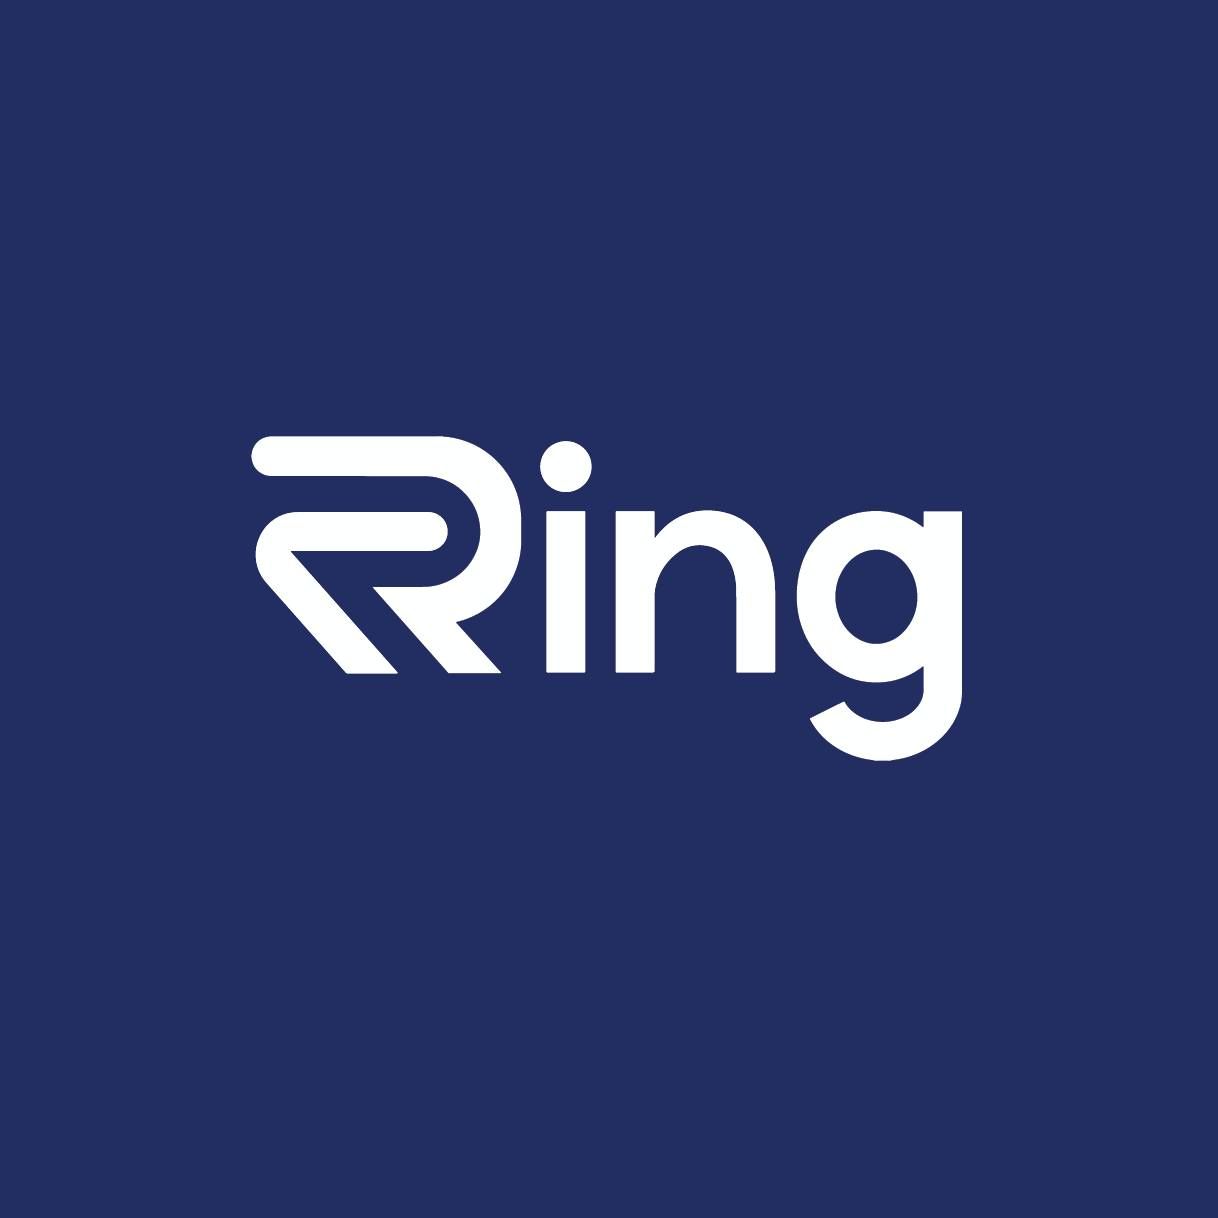 Olympic Rings Logo - Logo Database - Graphis